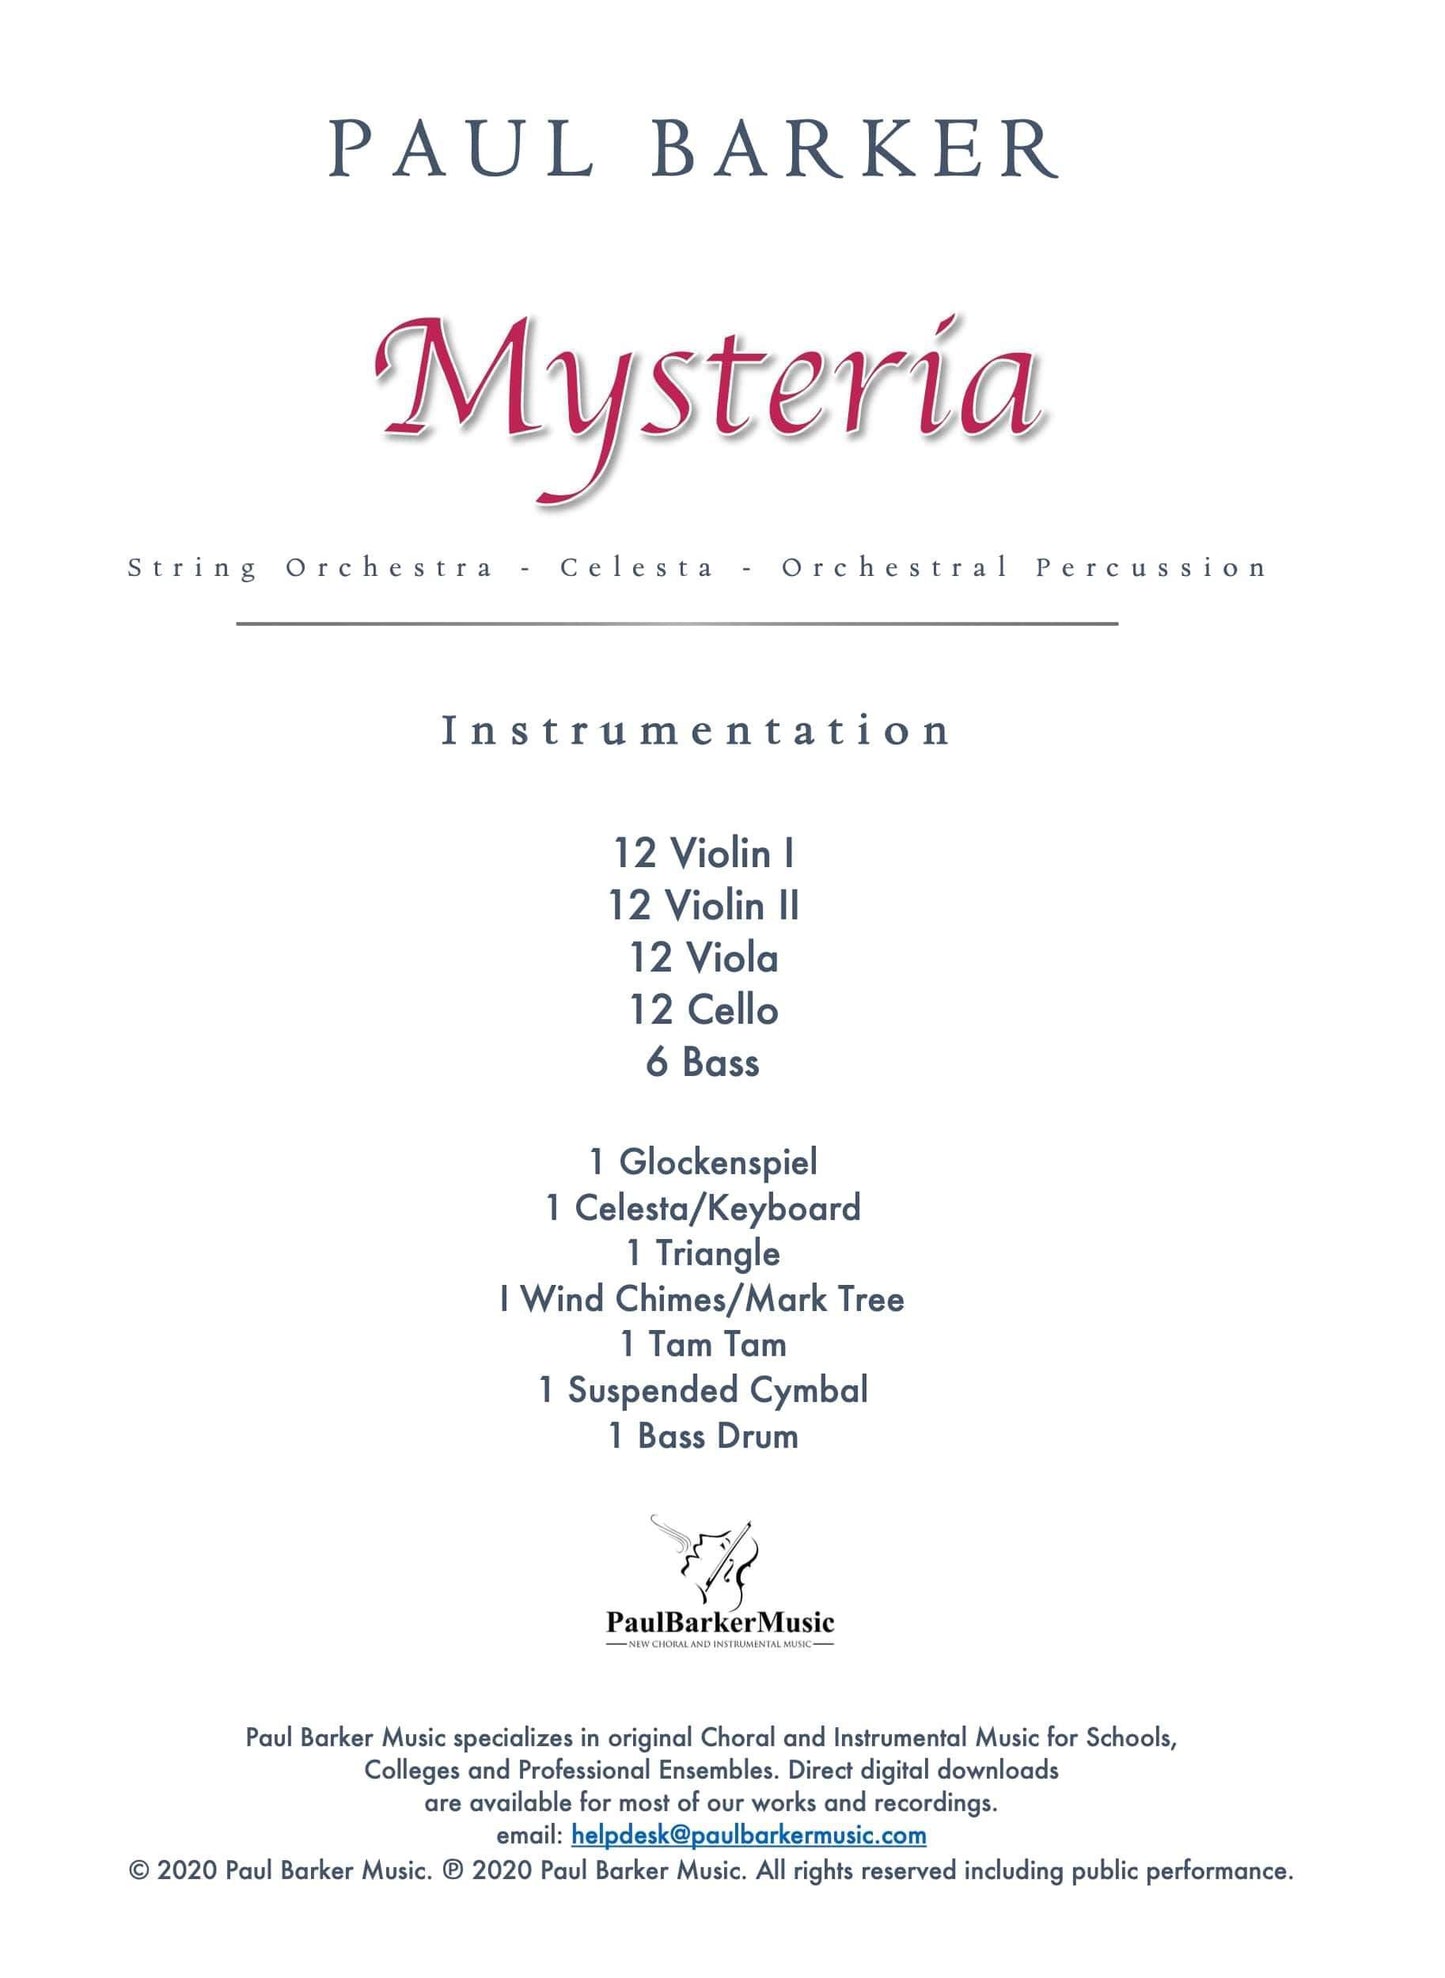 Mysteria - Paul Barker Music 